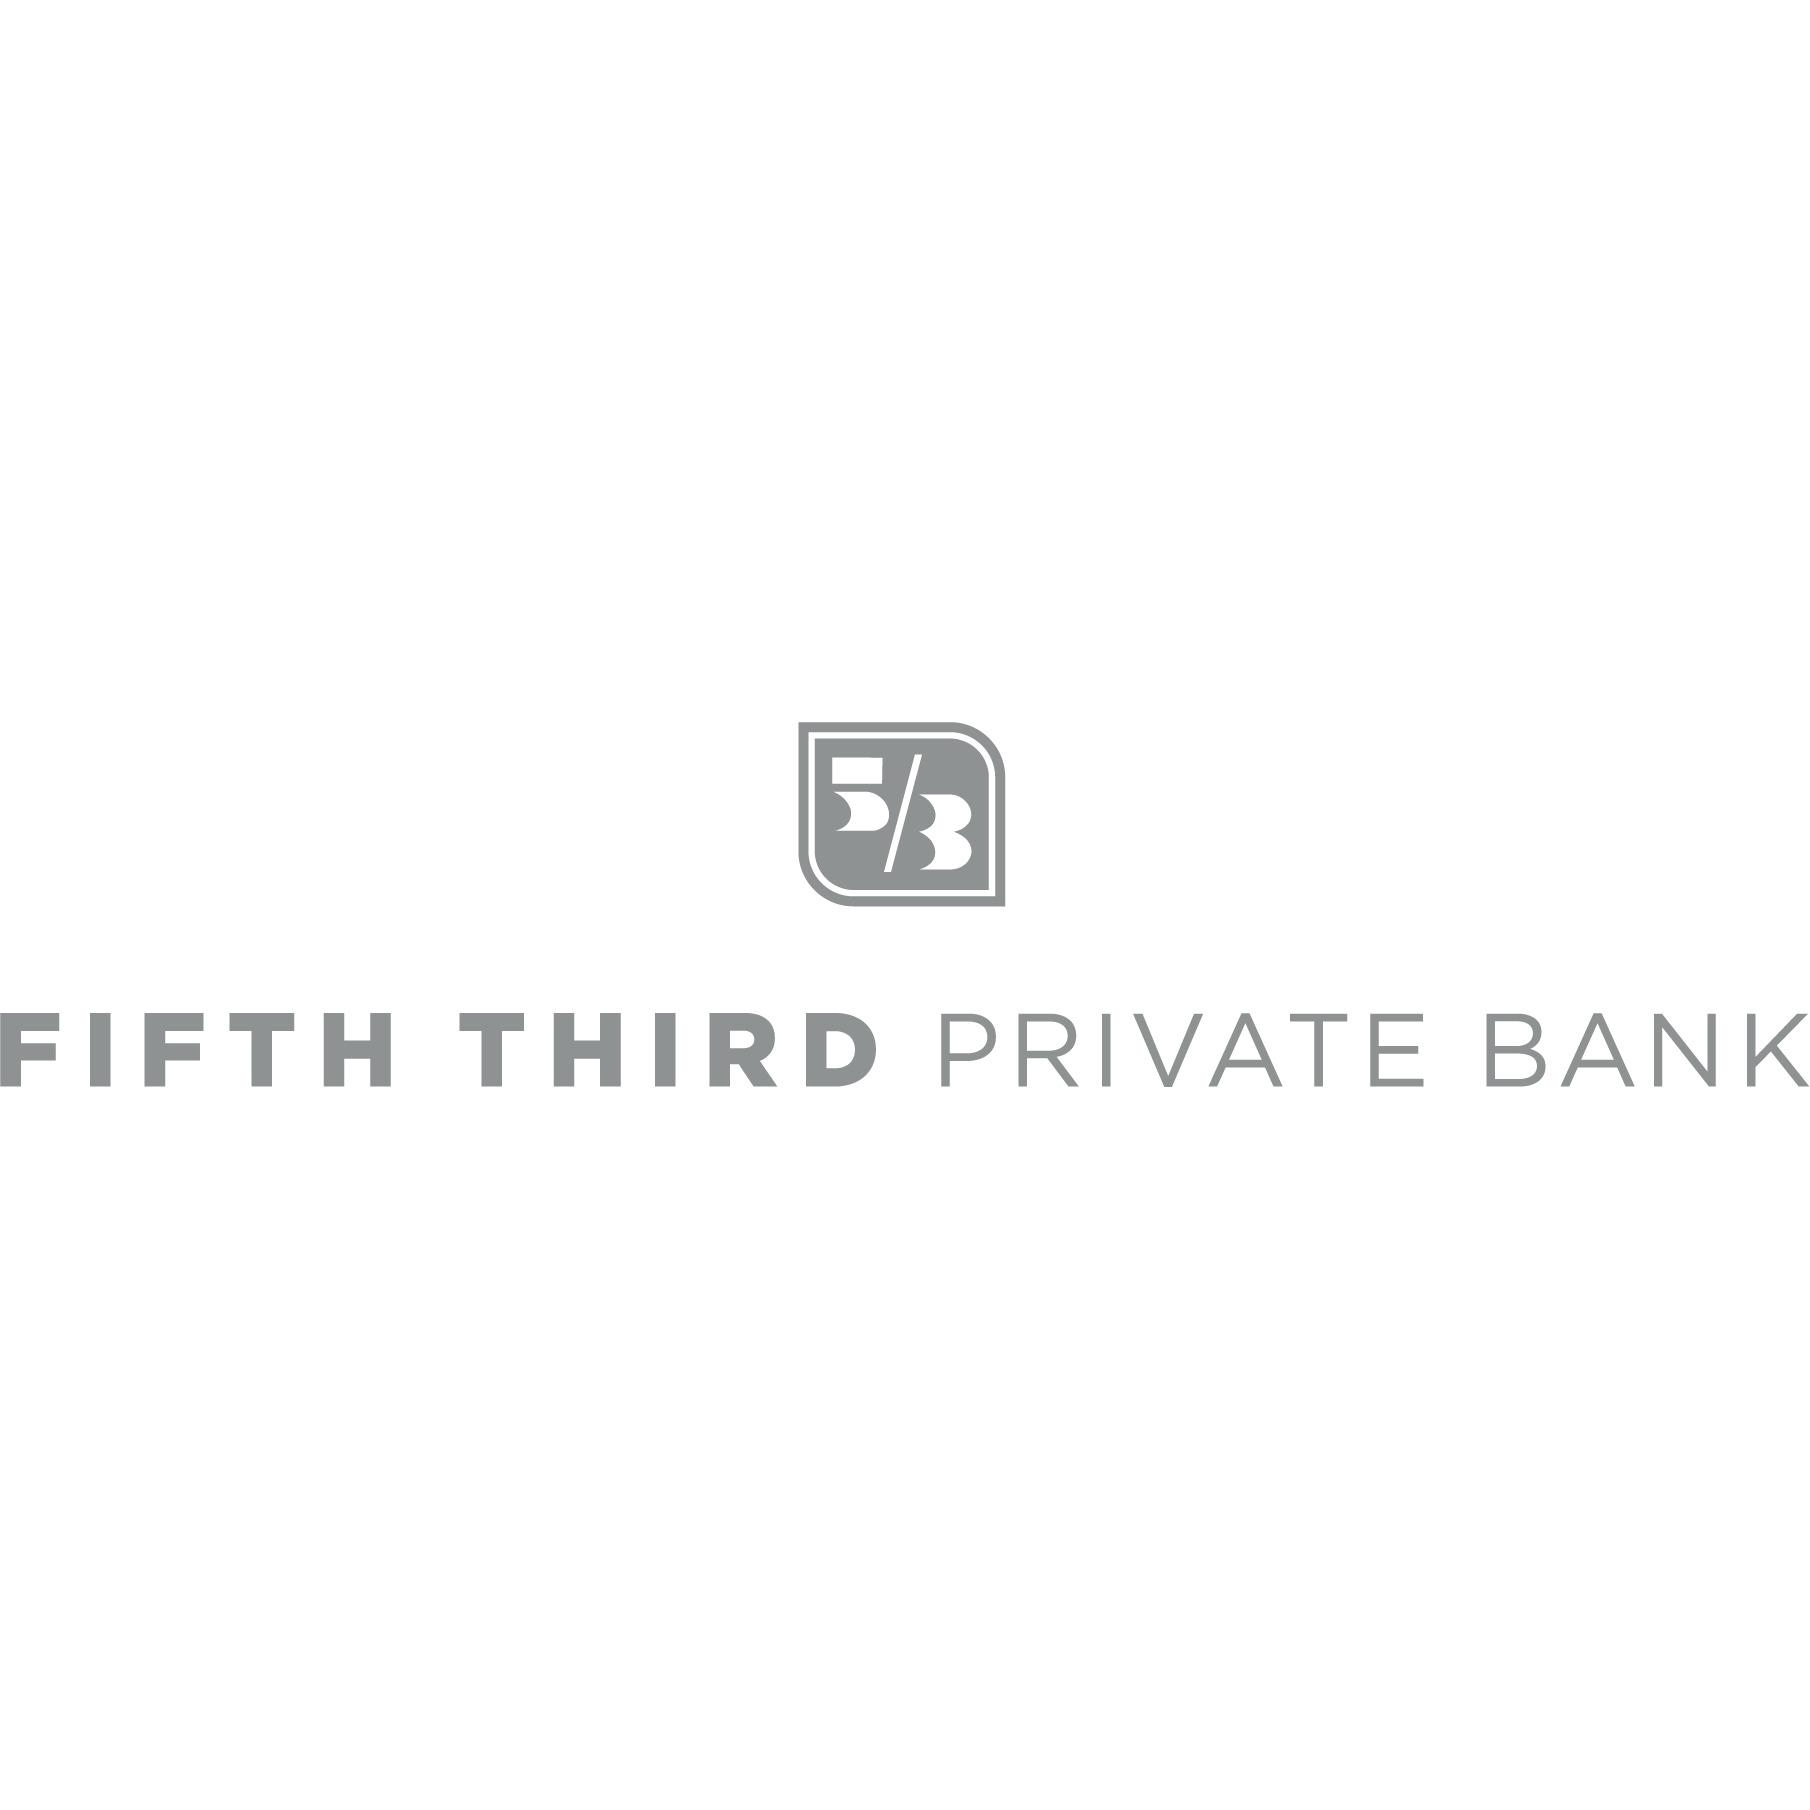 Fifth Third Private Bank - Brian Van Jura